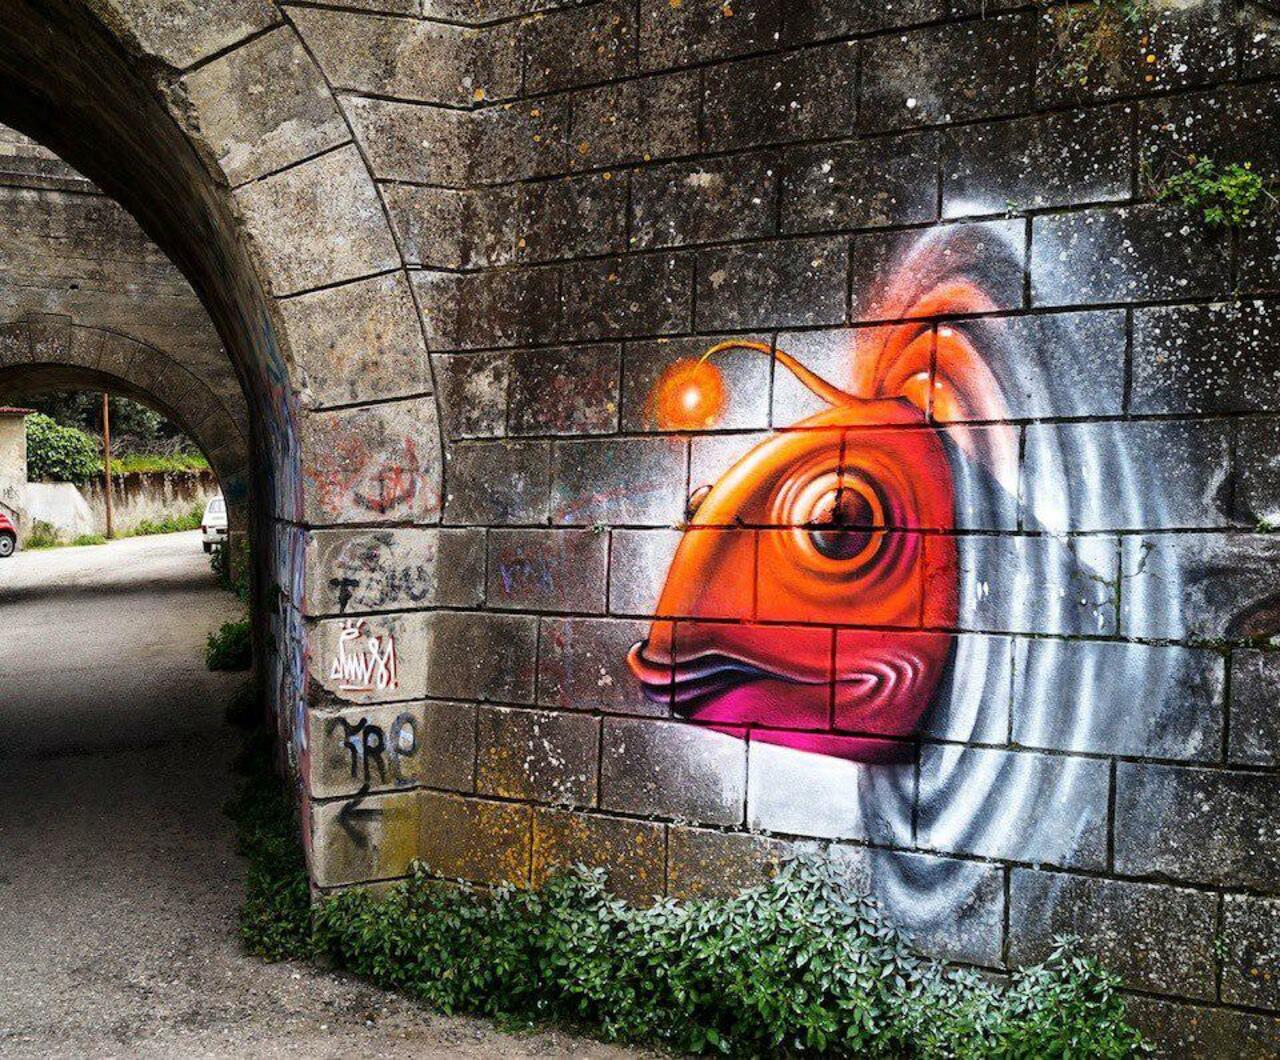 RT @niumestreetart: Cosmic fish from outer world. Discover more #streetart pieces: http://bit.ly/CosmicFish #graffiti http://t.co/JaBF8EKnhJ